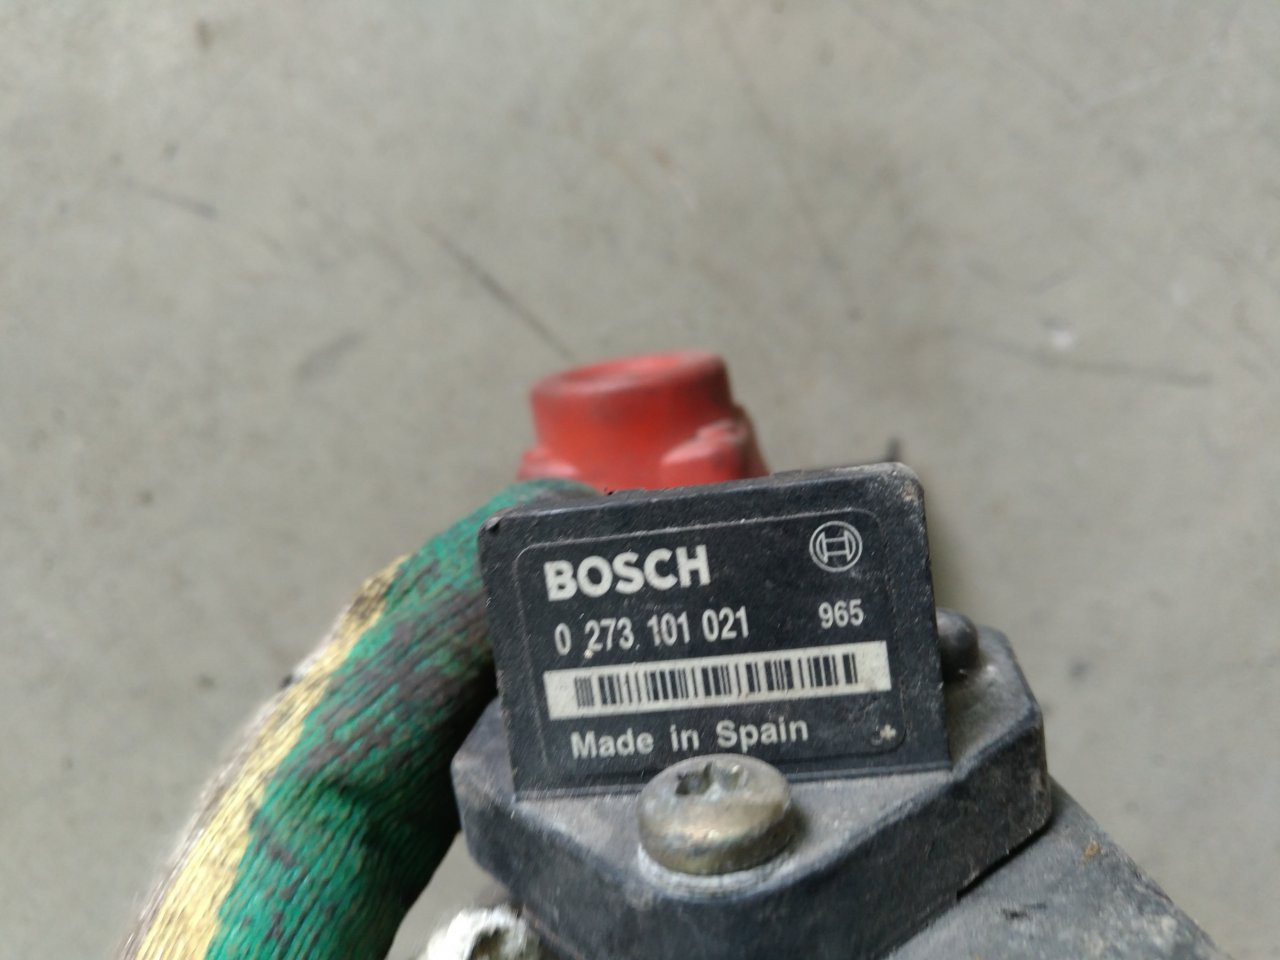 Бош датчик воды. 0 273 101 021 Bosch. Датчик Bosch 6540280130093. Дистанционный радиолокационный датчик (Bosch 0203000063). Bosch 0 319 370 273.